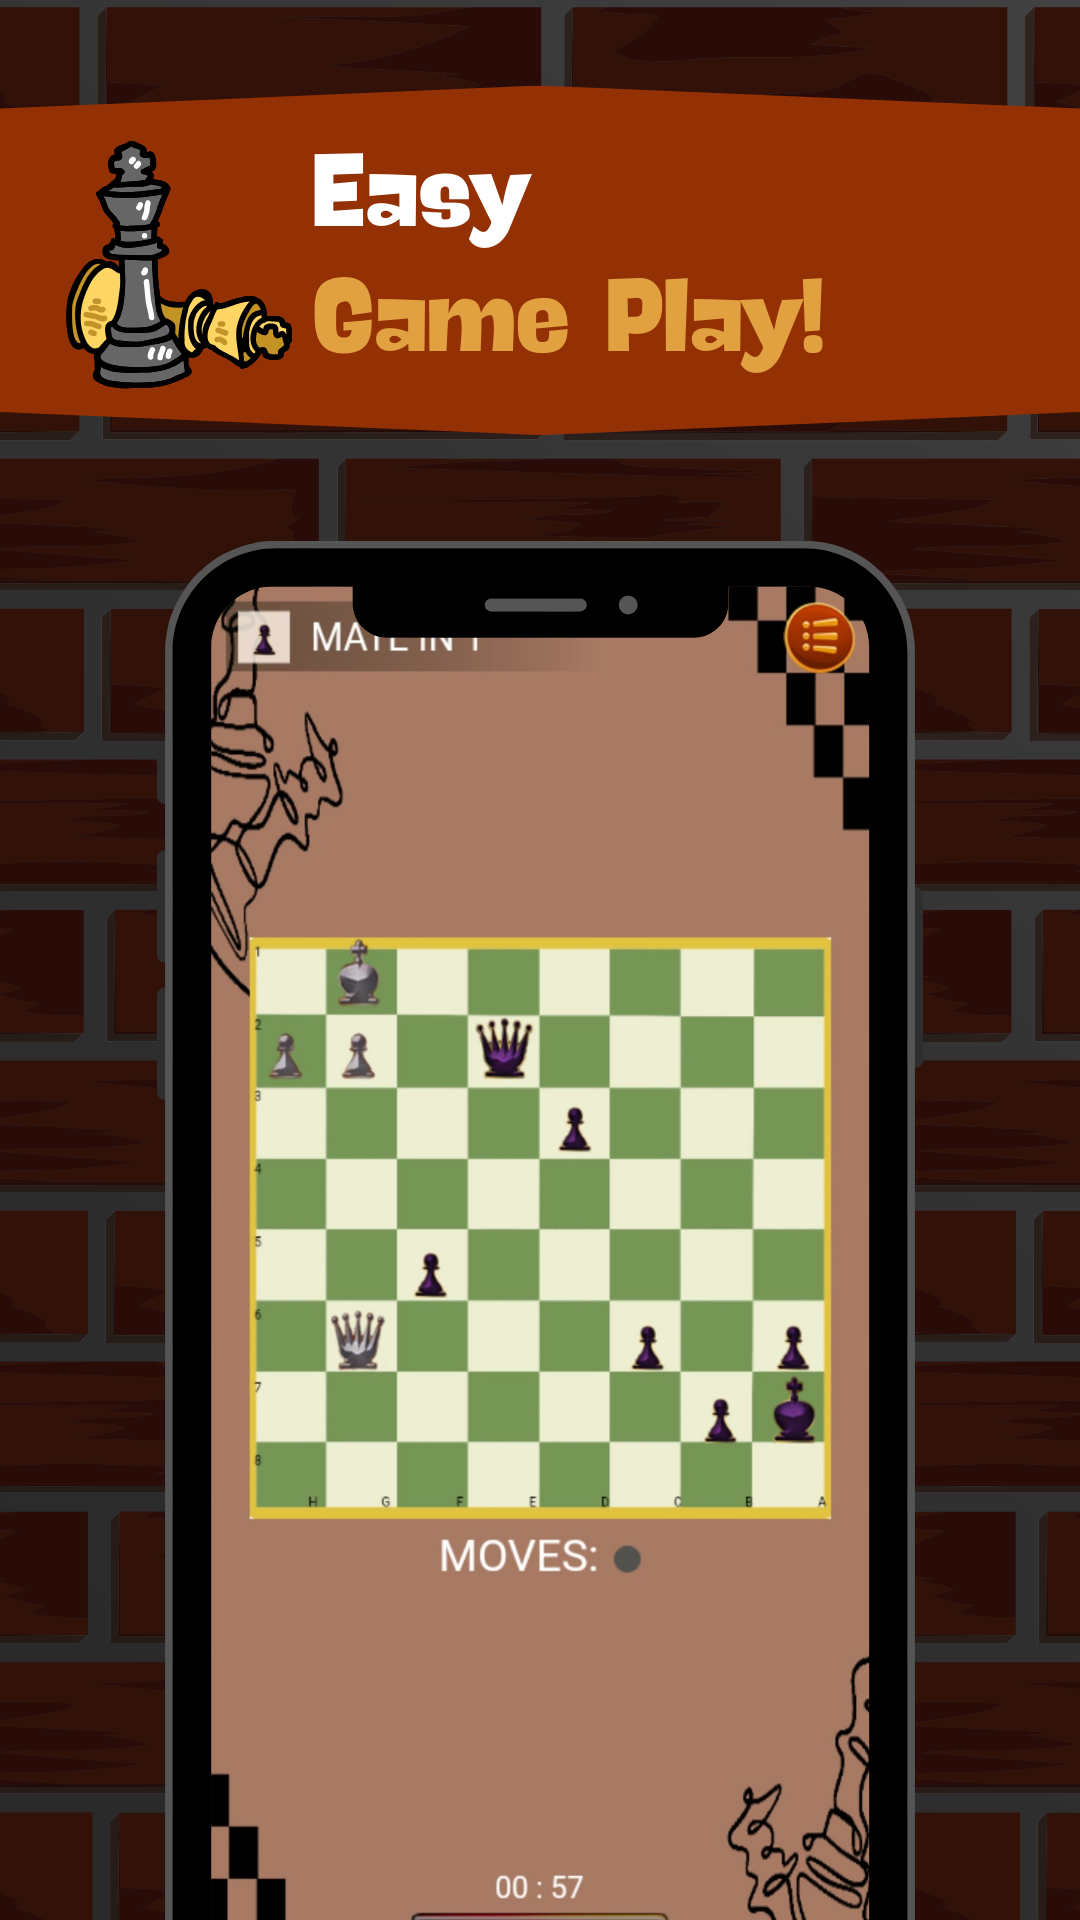 Checkmate Challenges ภาพหน้าจอเกม